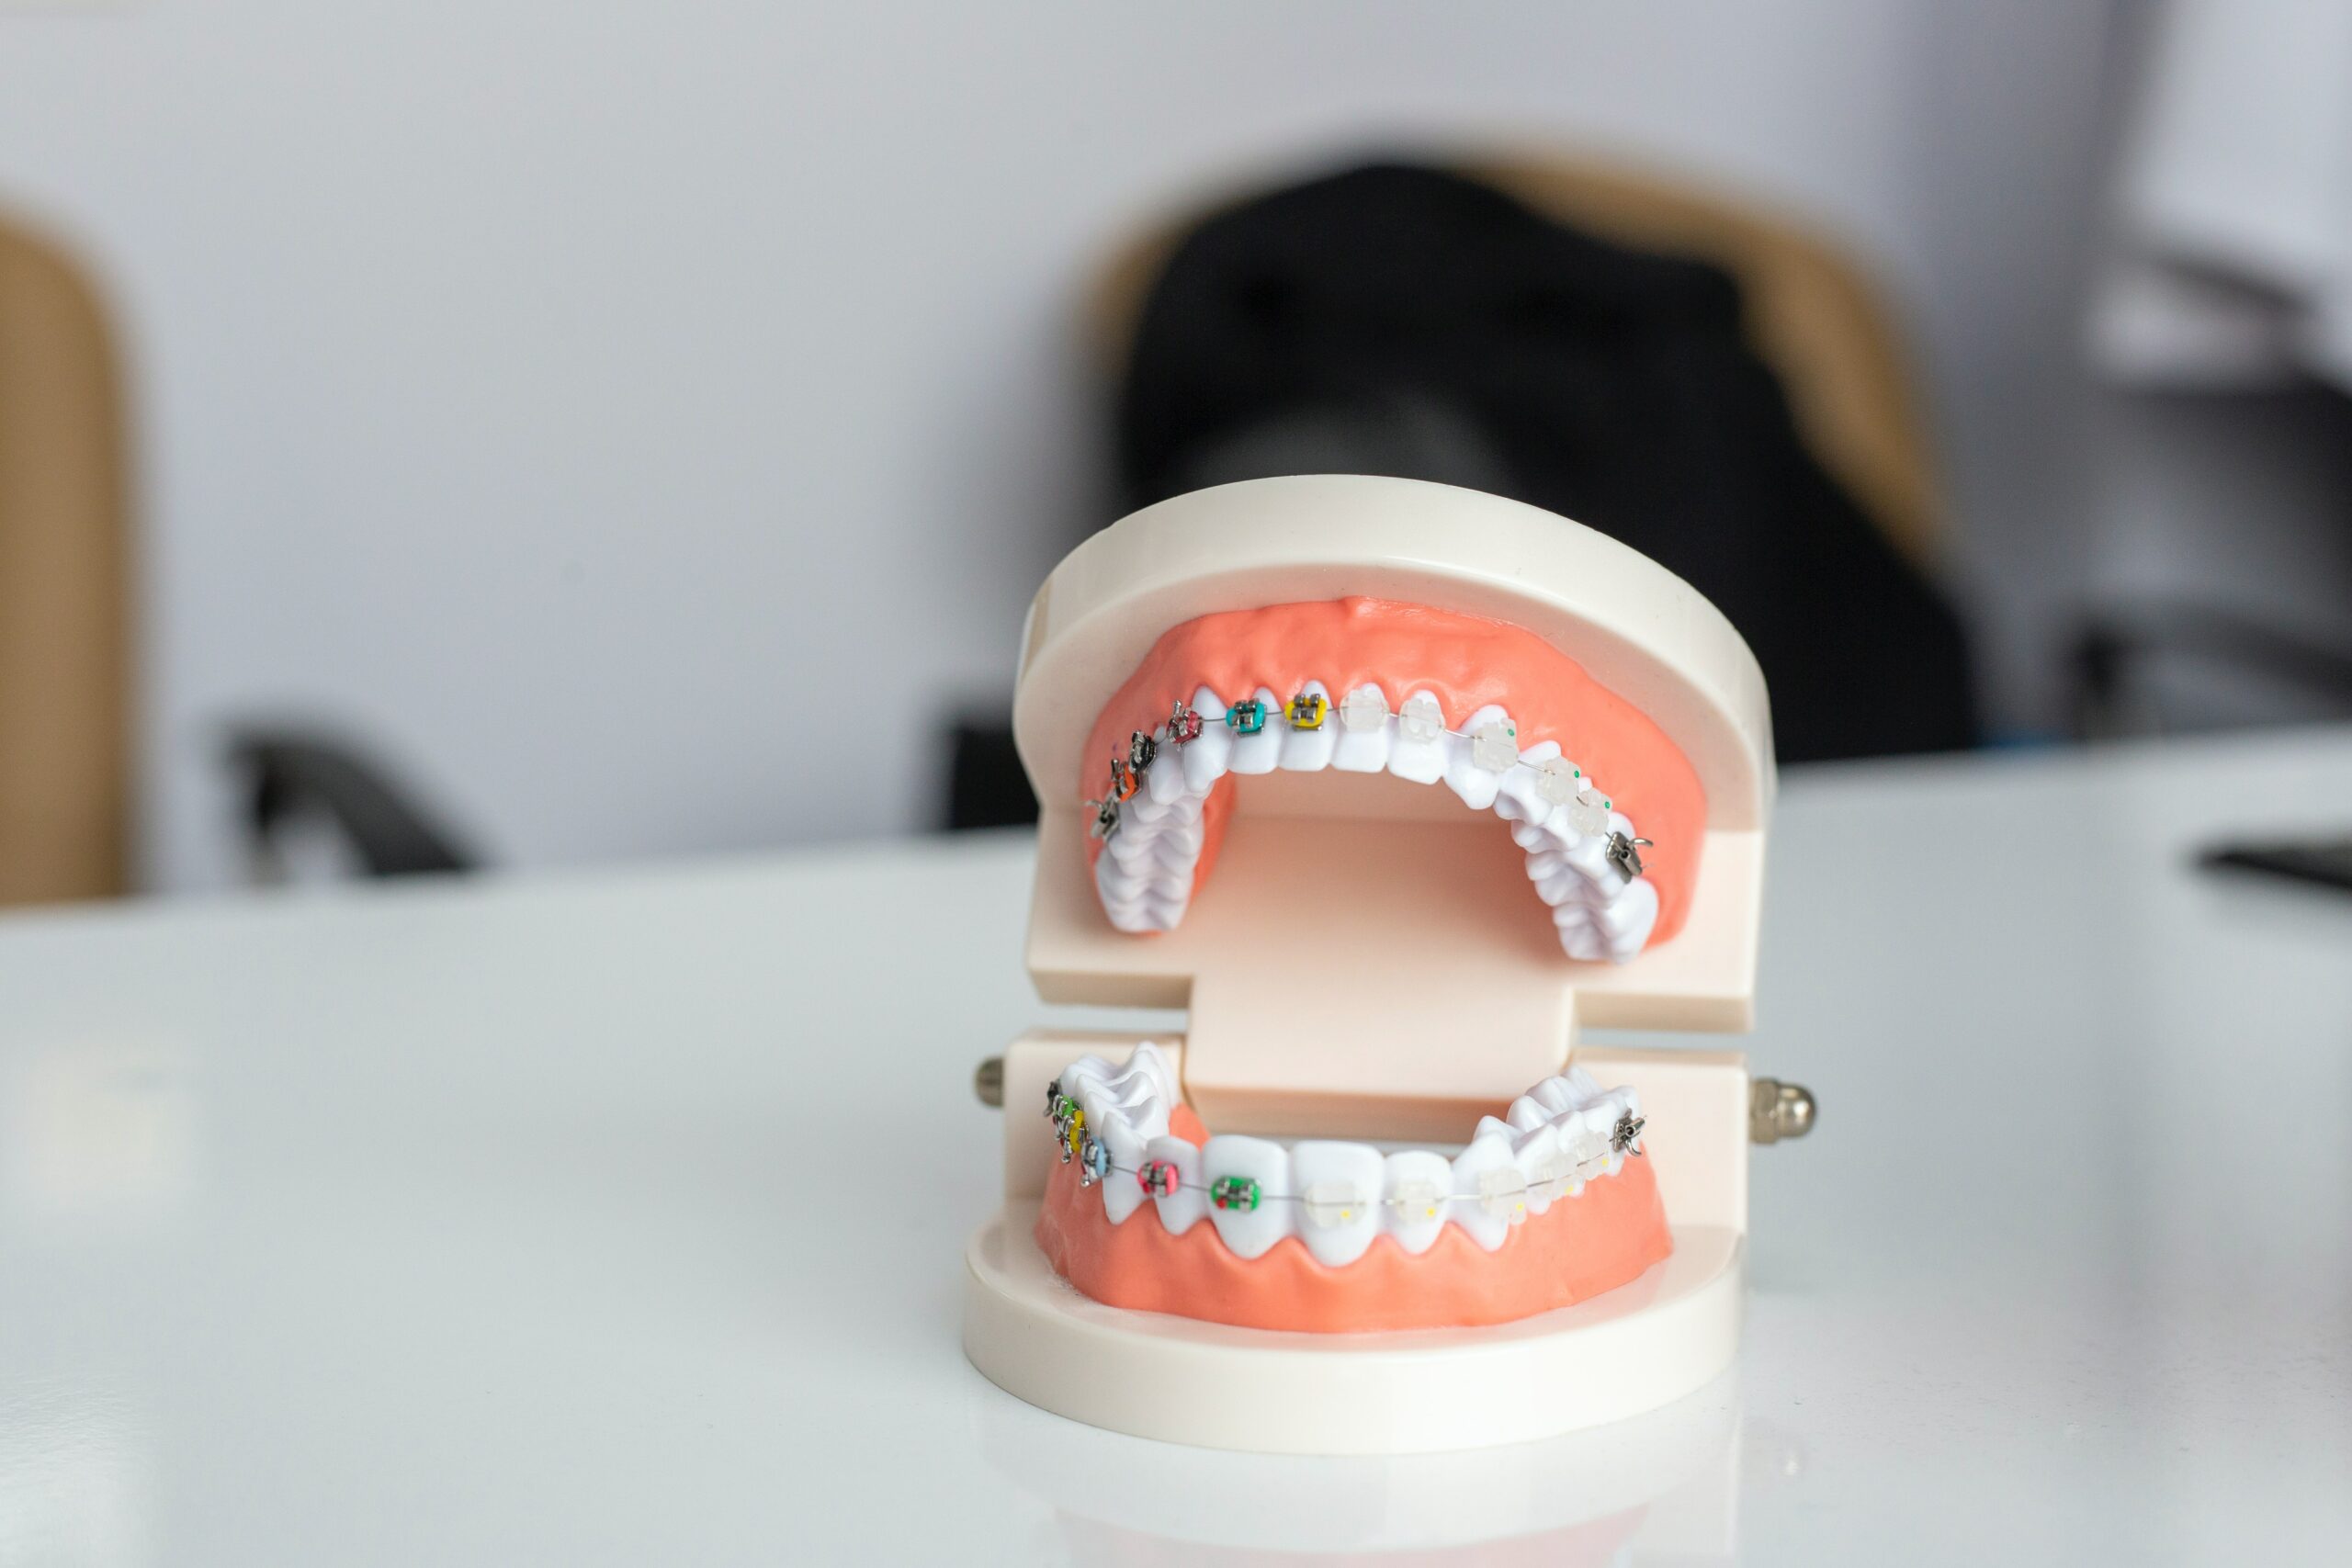 A model of teeth with metal braces